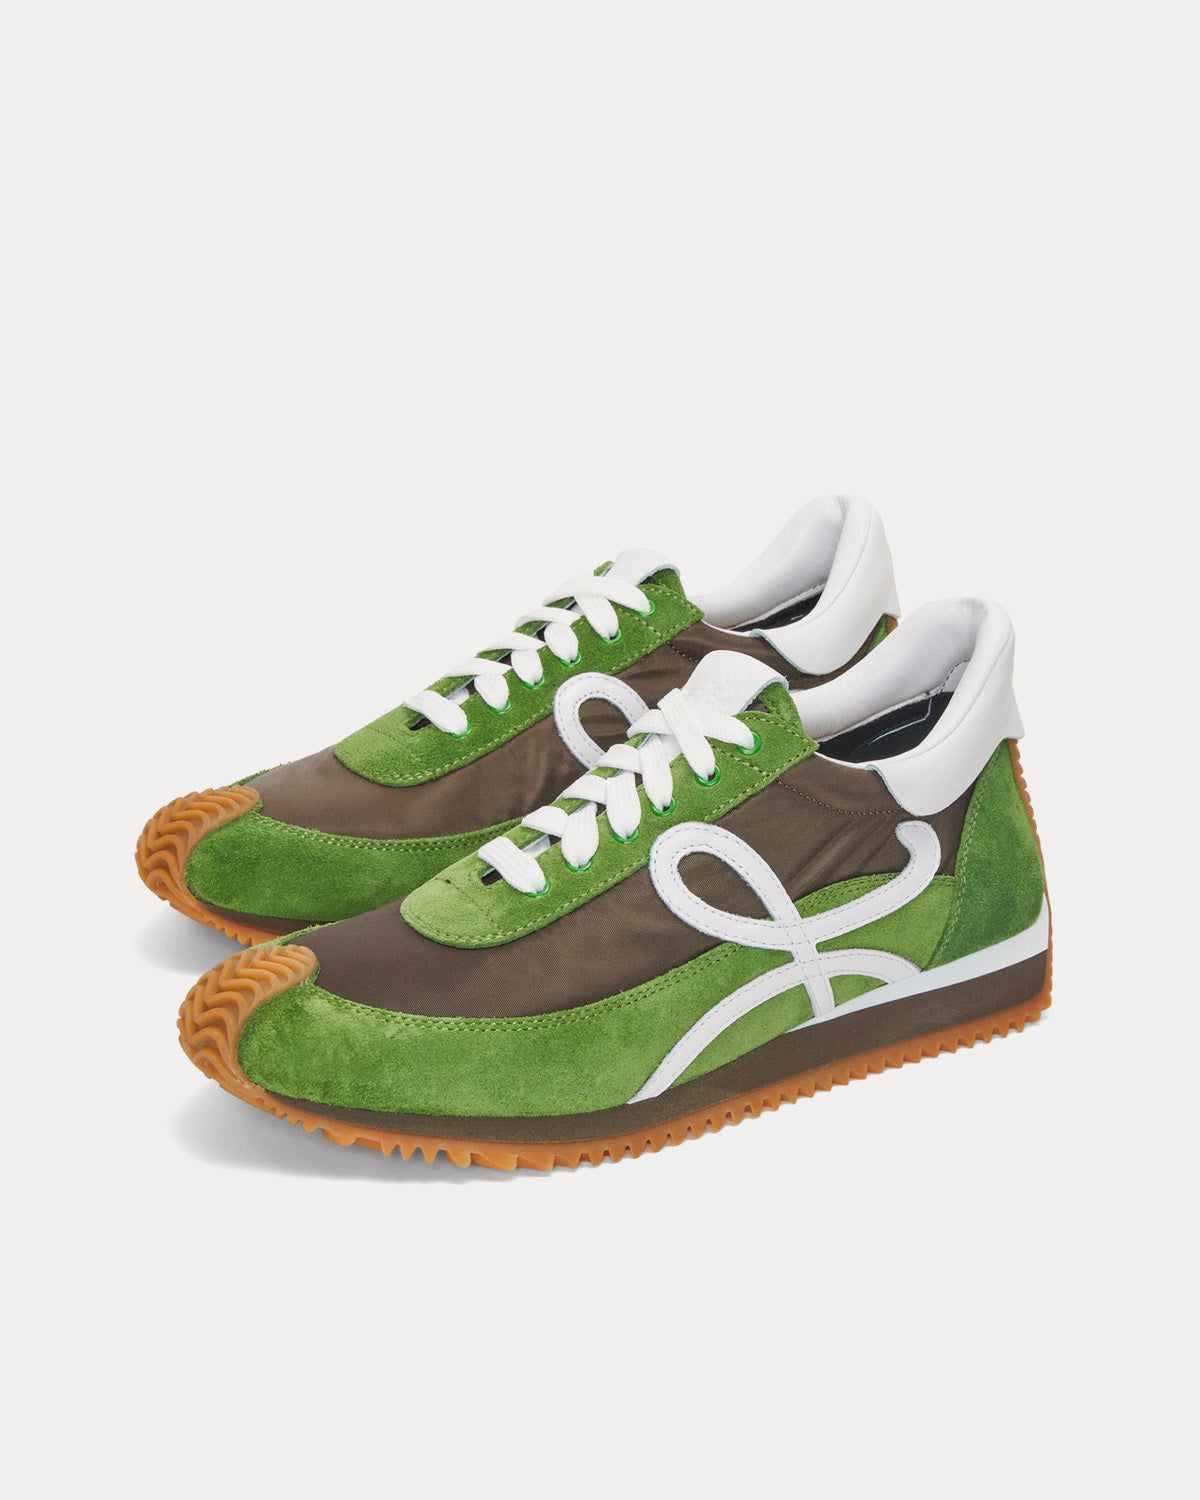 Loewe x Paula's Ibiza - Flow Runner Calfskin & Nylon Green / Brown Low Top Sneakers